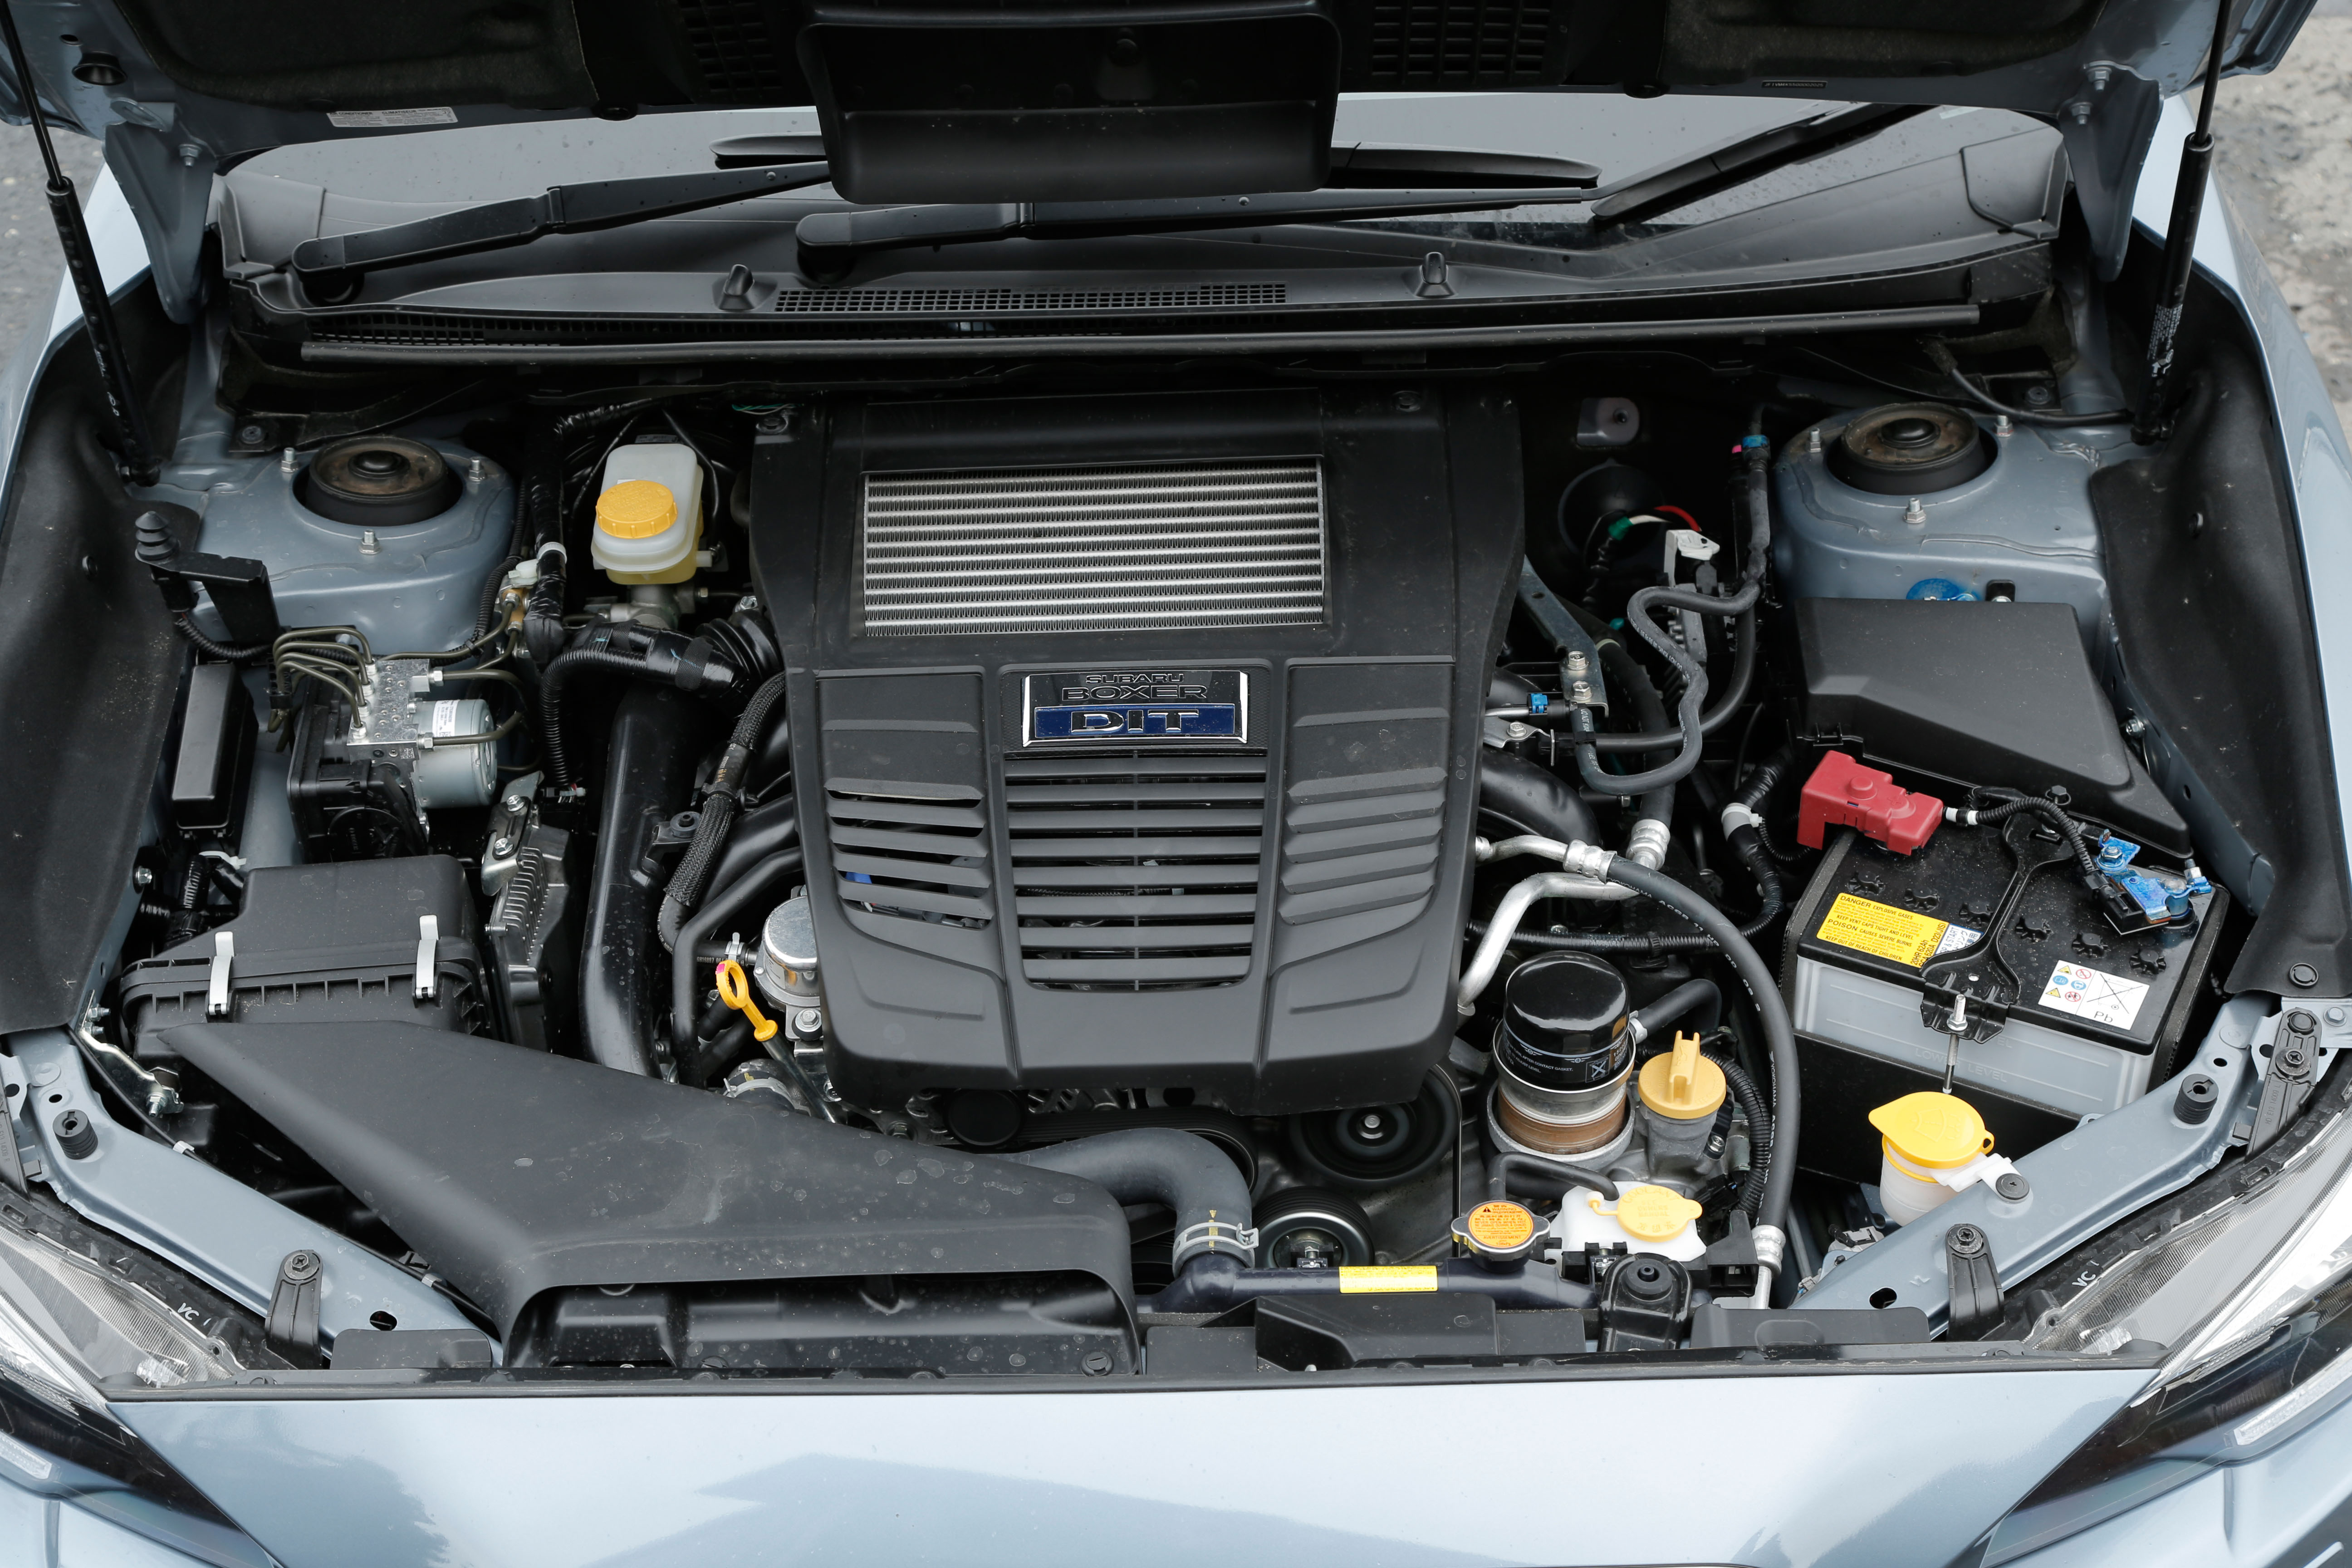 The 1.6-litre turbo engine in the Subaru Levorg